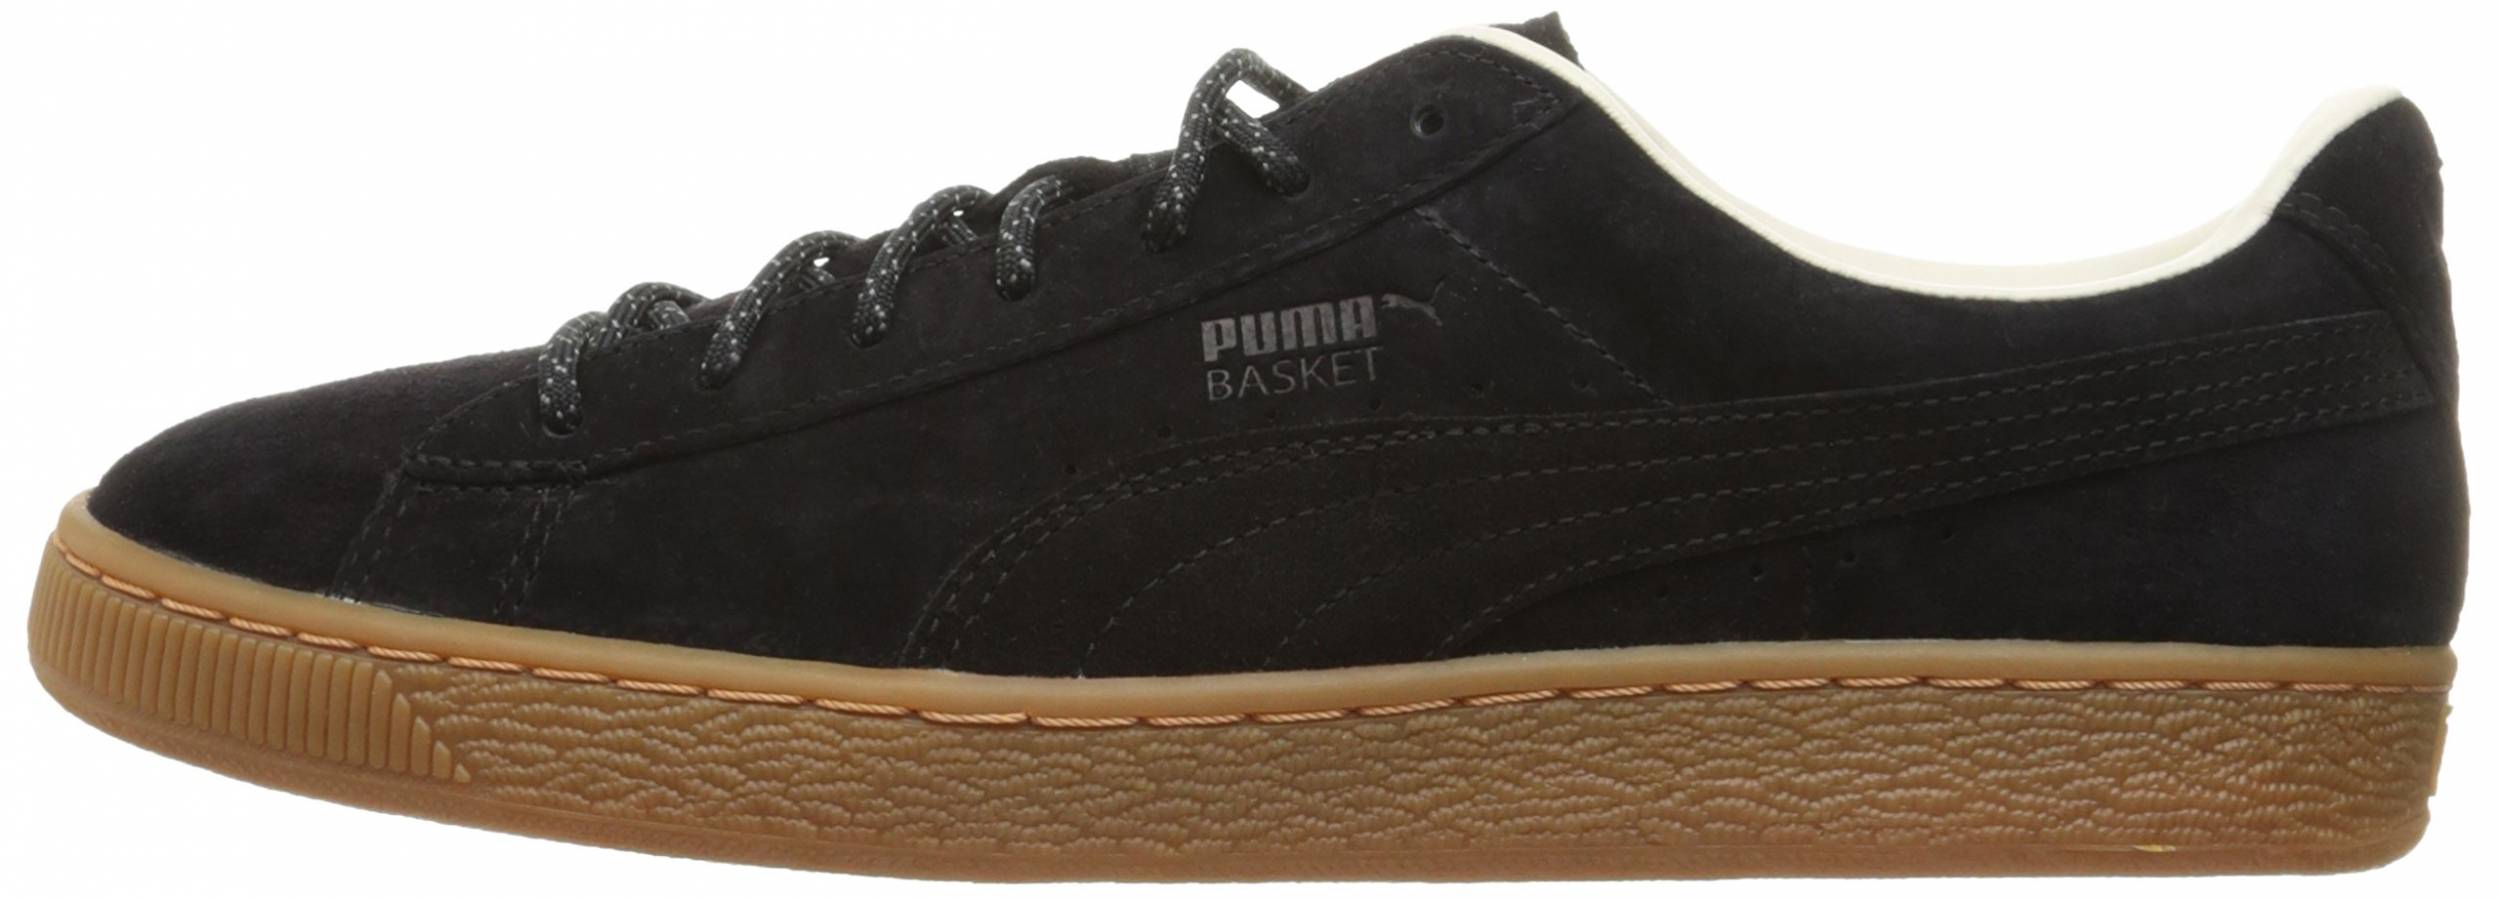 black puma basket leather